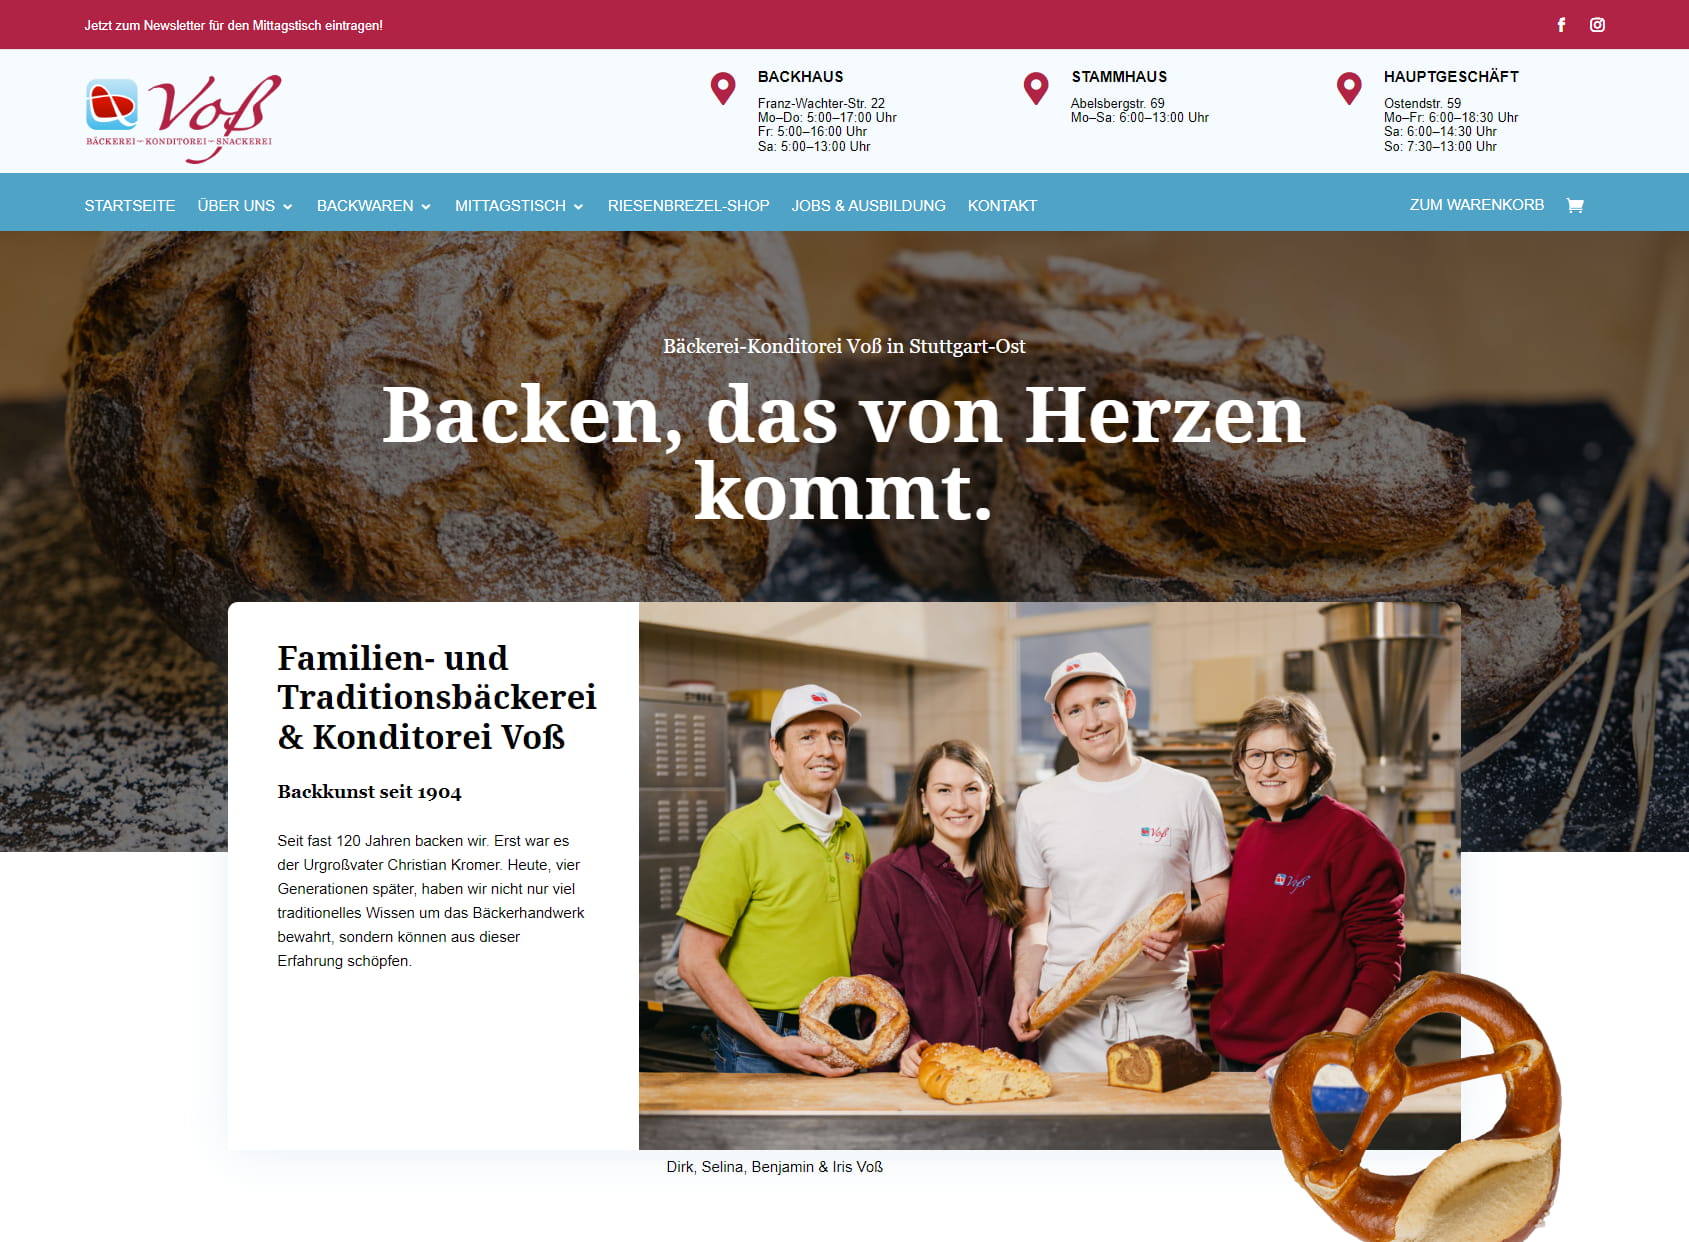 Bäckerei-Konditorei Voß GmbH